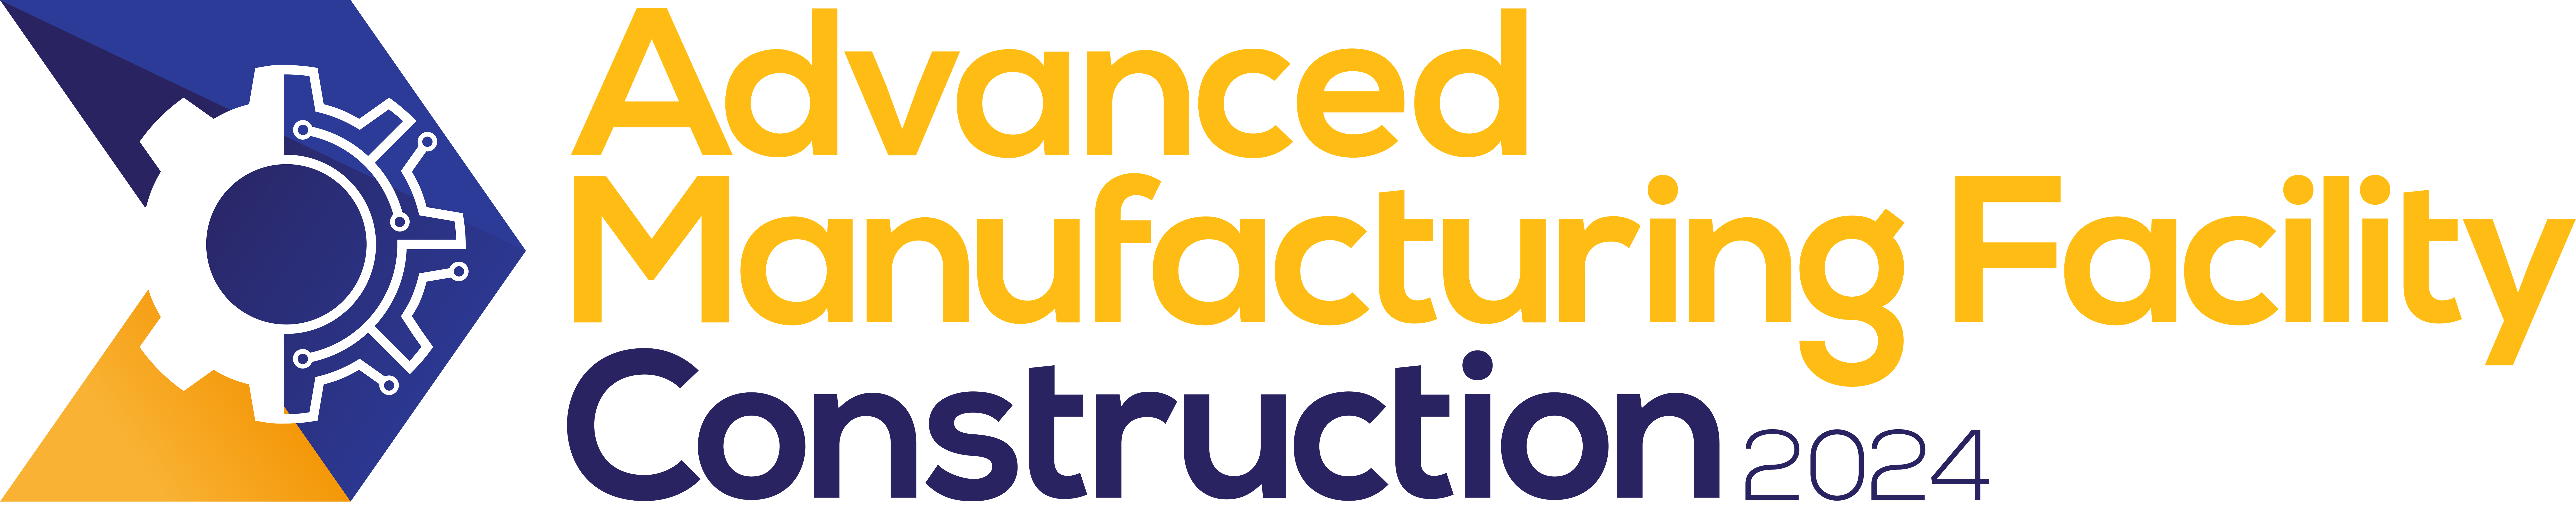 Advanced Manufacturing Facility Construction 2024 - coloured logo (1)